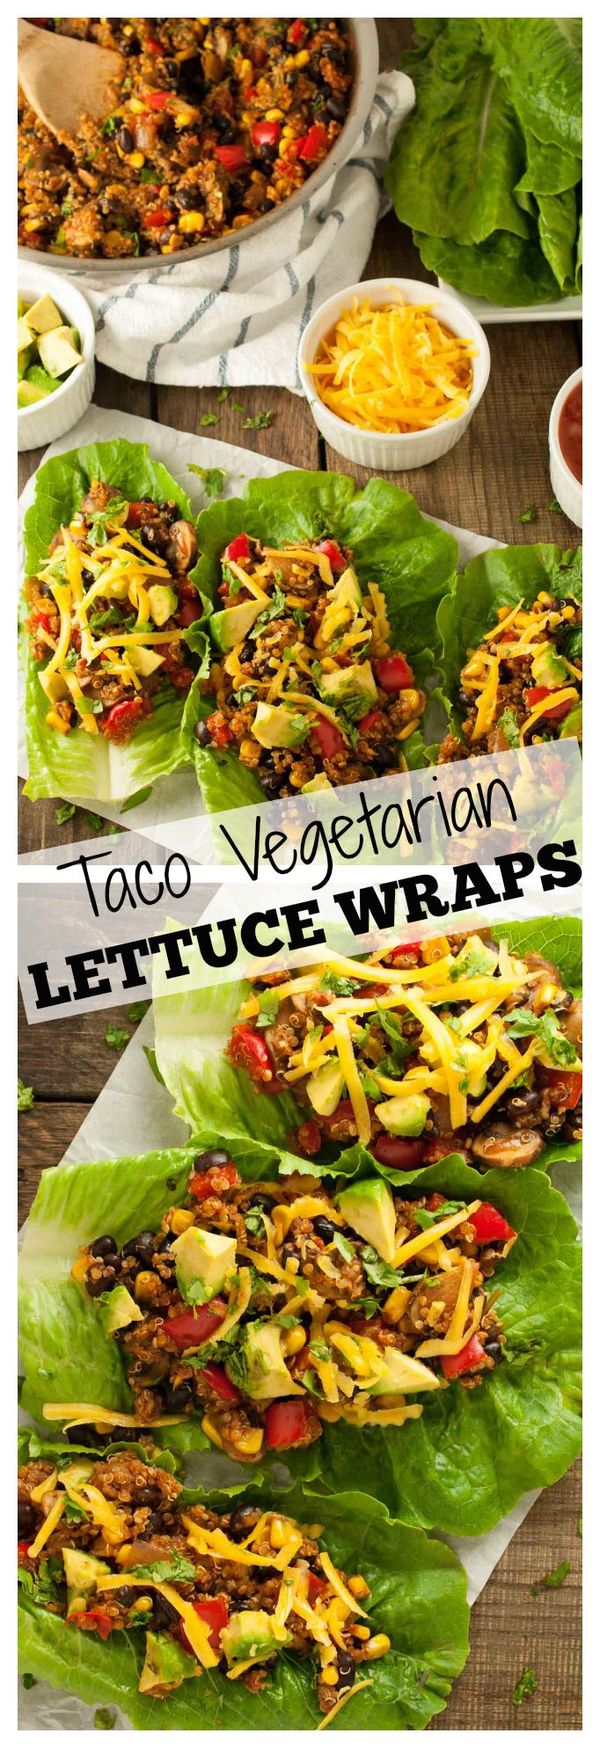 Taco Vegetarian Lettuce Wraps